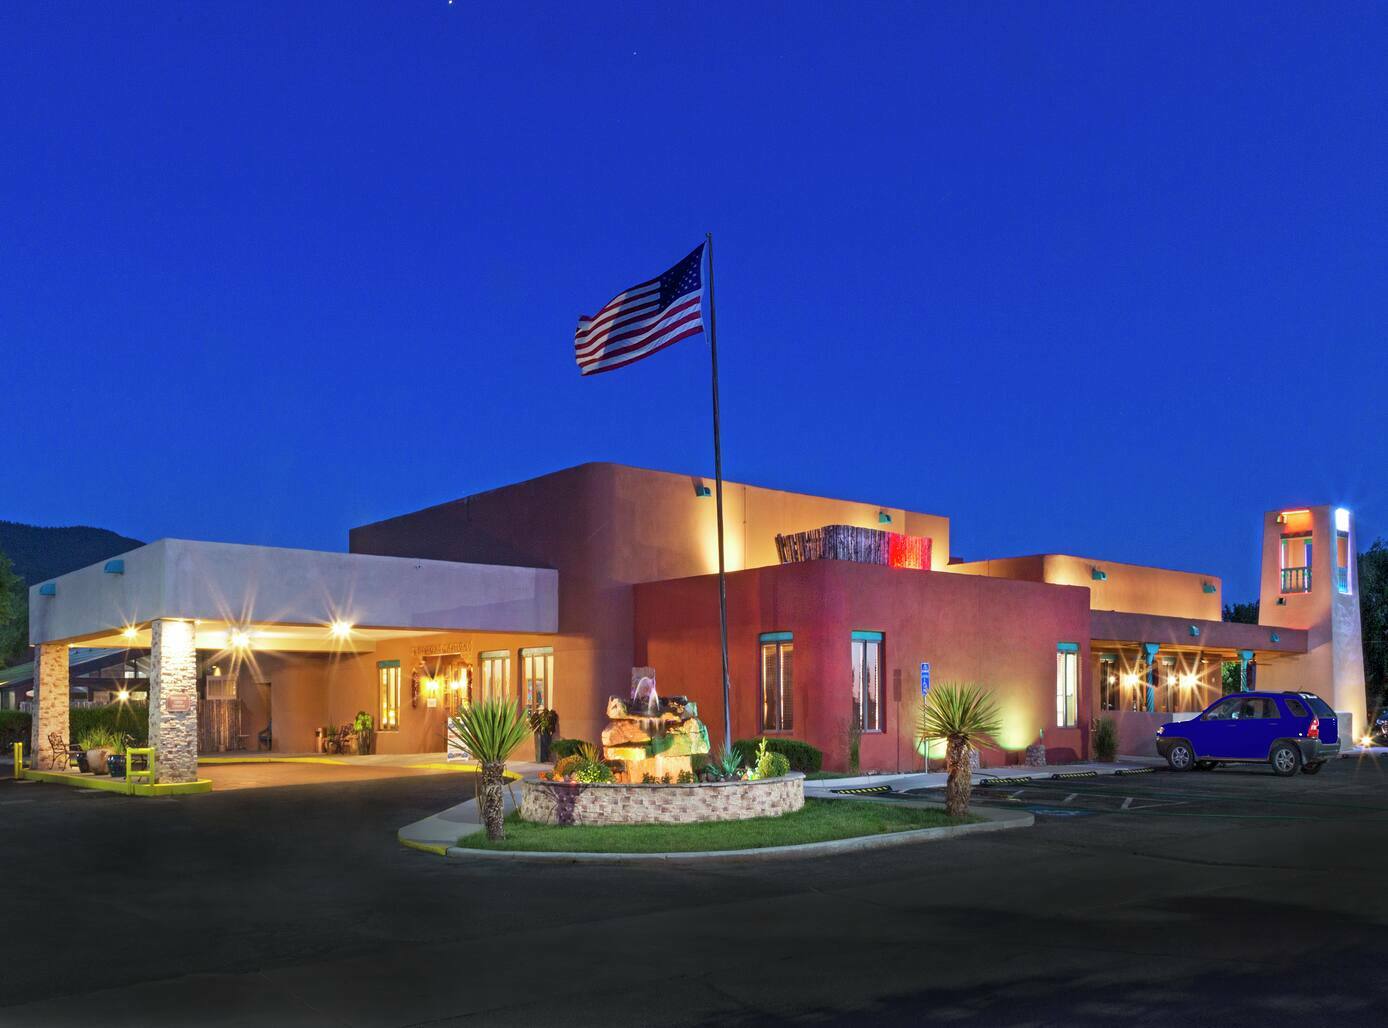 Photo of Hotel Don Fernando de Taos, Taos, NM